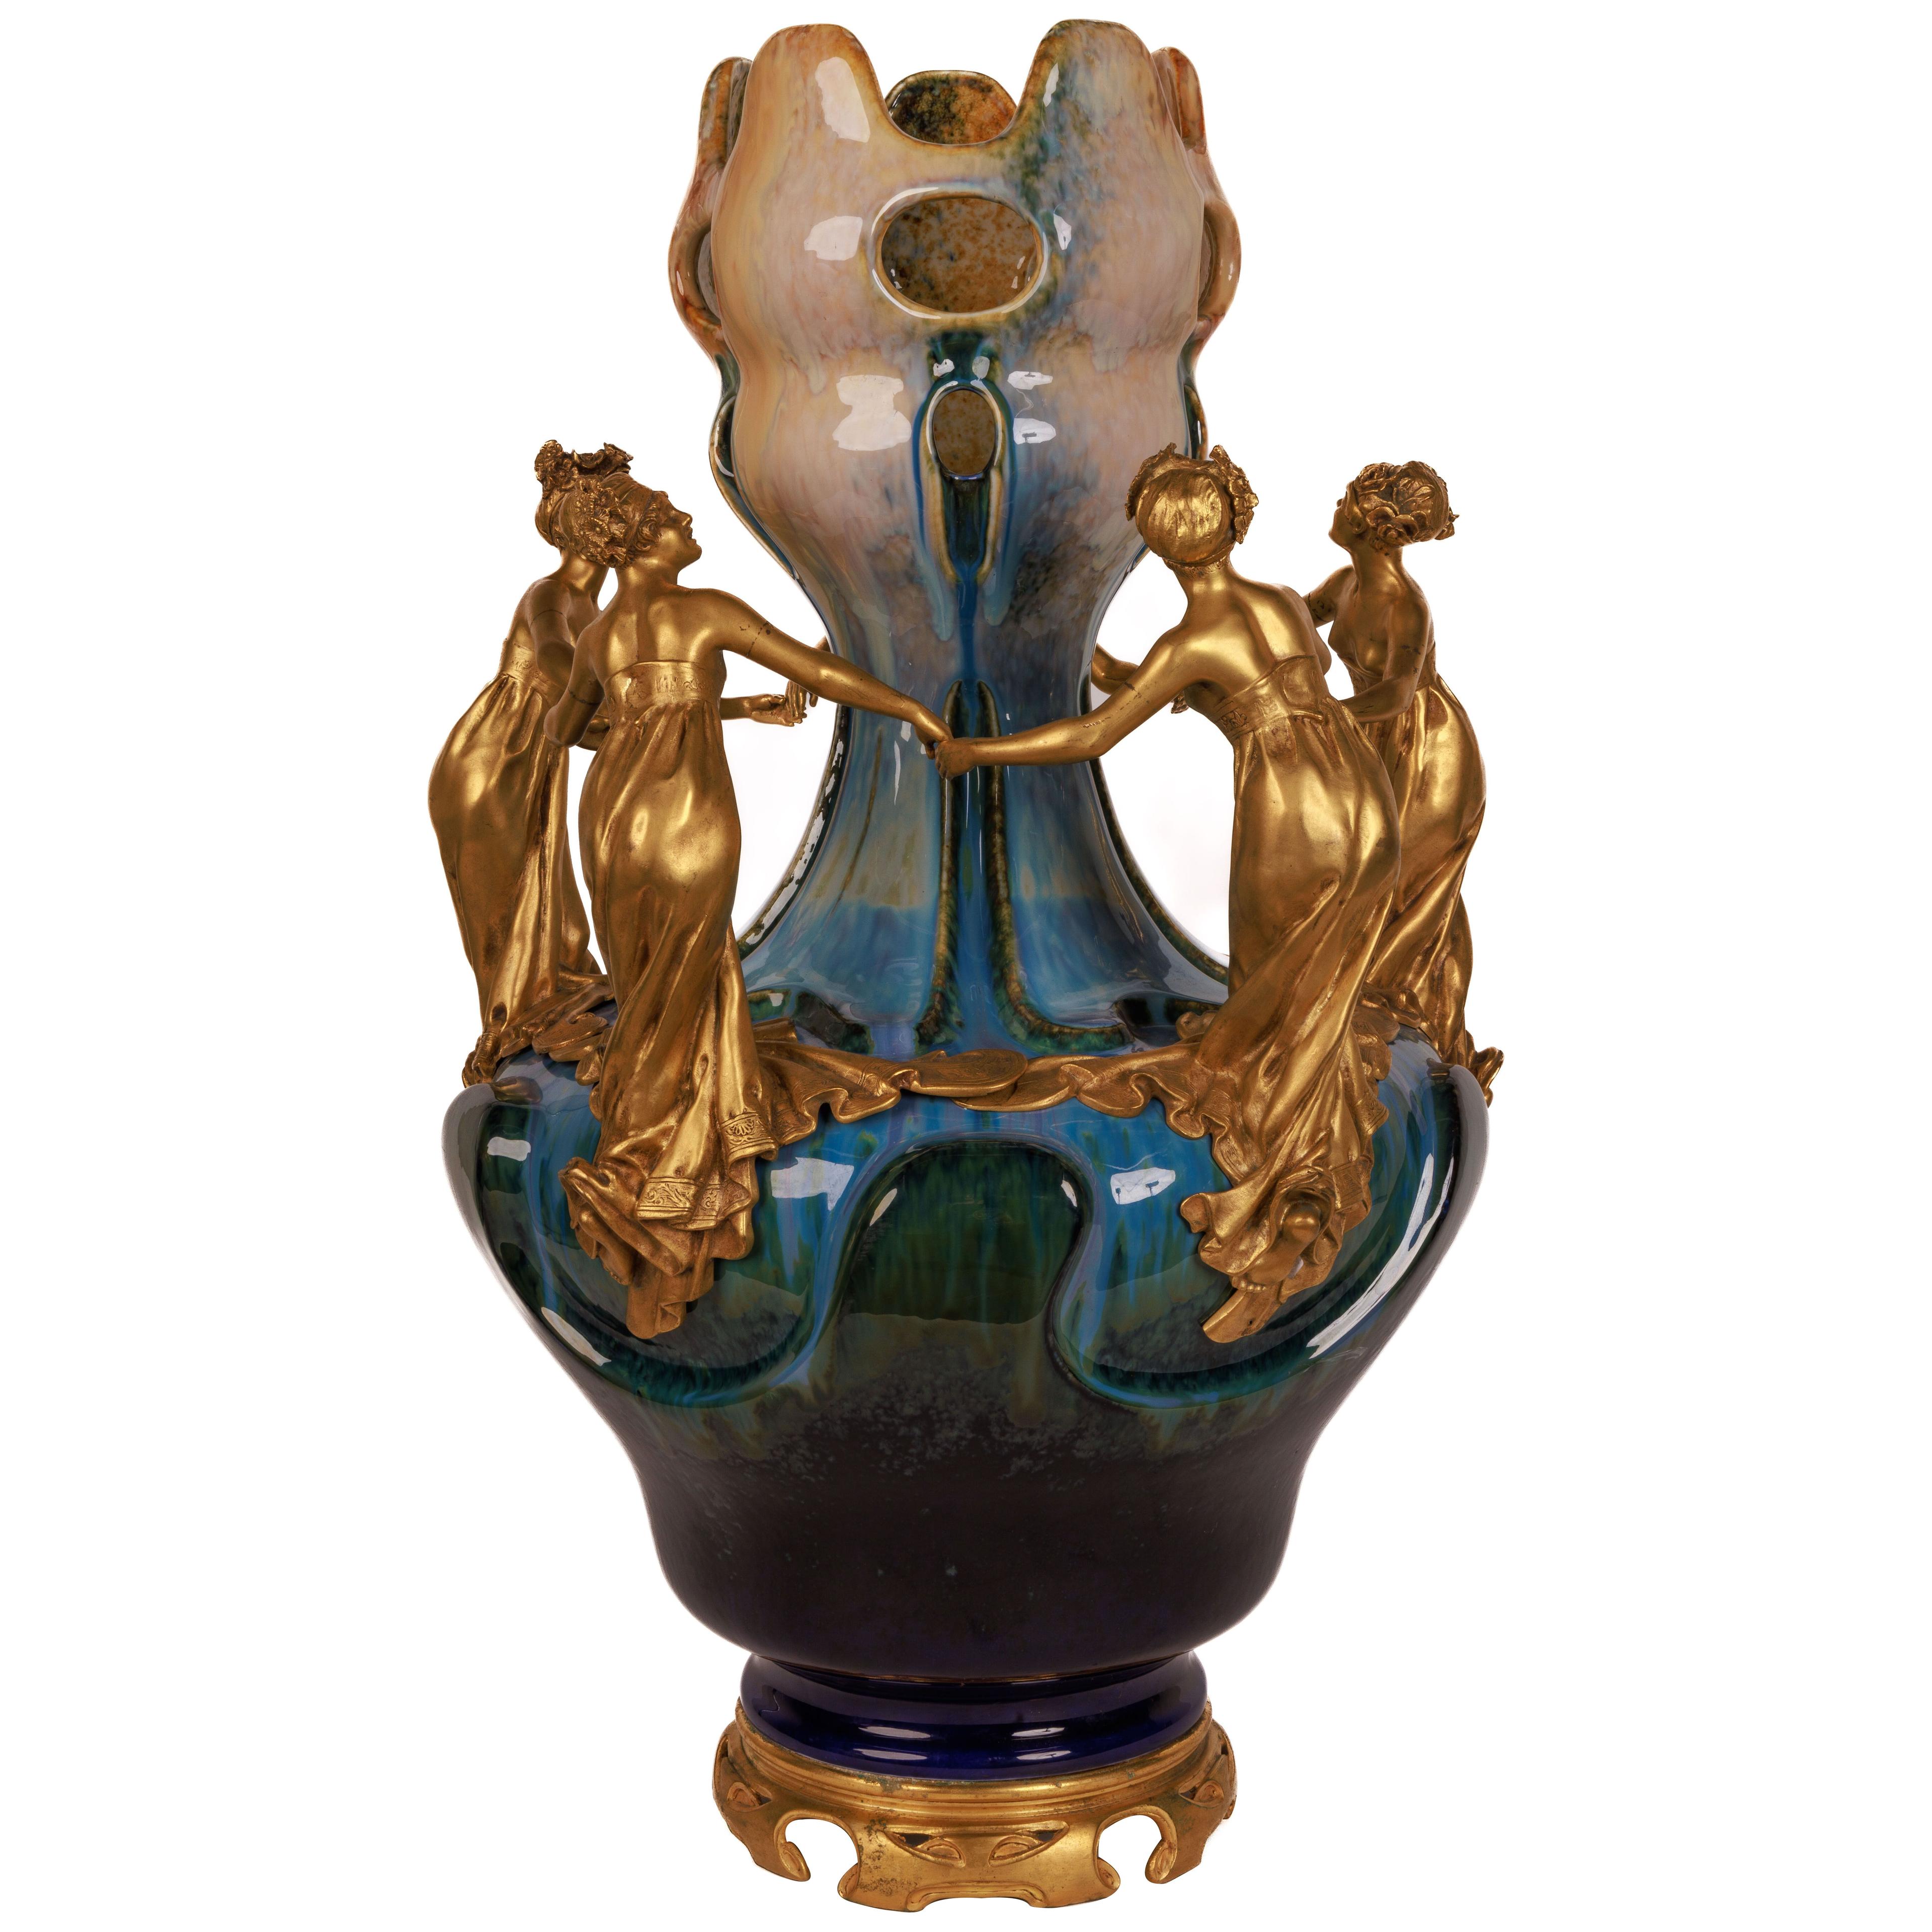 Important Monumental Art Nouveau Ormolu-Mounted Ceramic "Exhibition" Vase